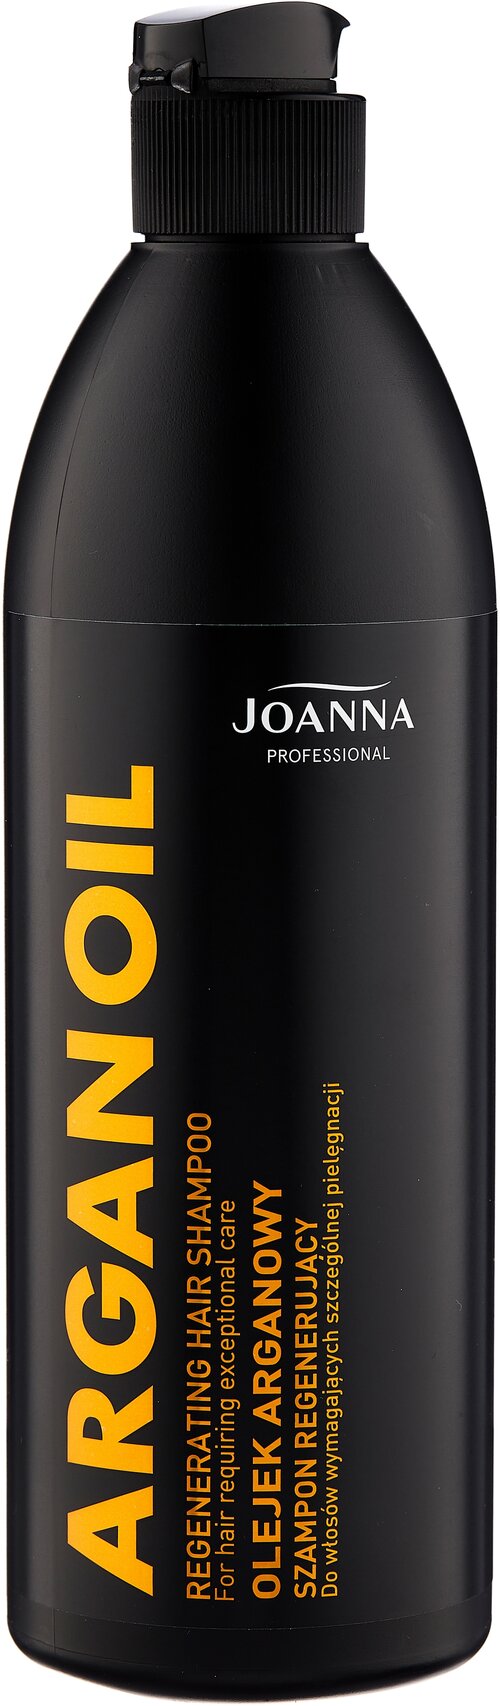 Joanna шампунь Professional Argan Oil Regenerating hair, 500 мл